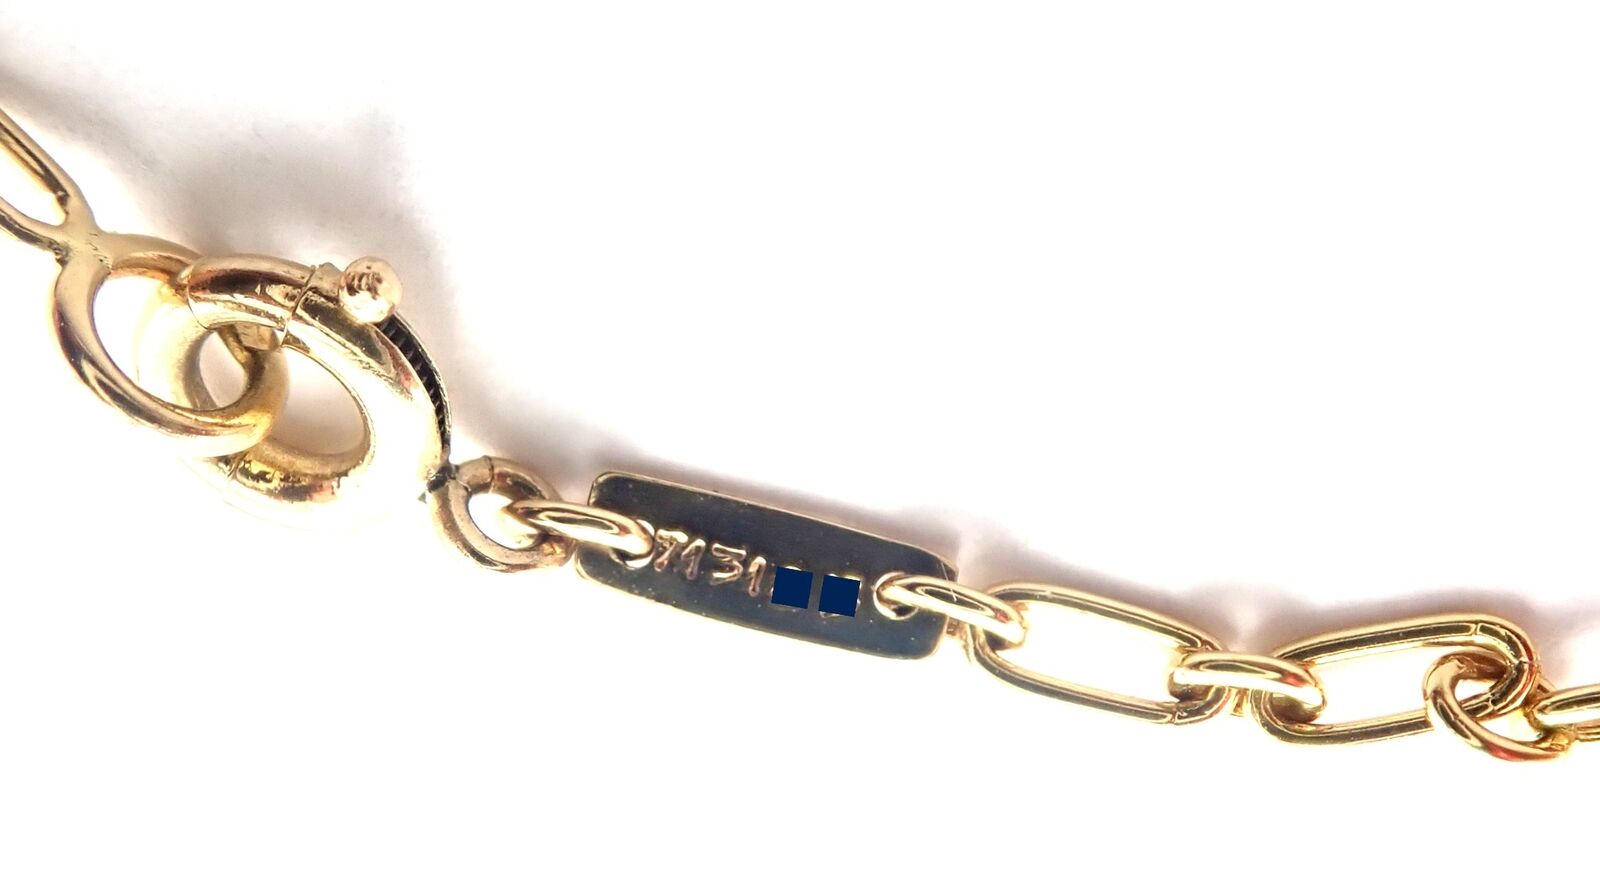 Louis Vuitton High Jewelry Diamond White Gold Tennis Bracelet For Sale at  1stDibs  louis vuitton tennis bracelet, louis vuitton high jewelry price,  tennis bracelet louis vuitton